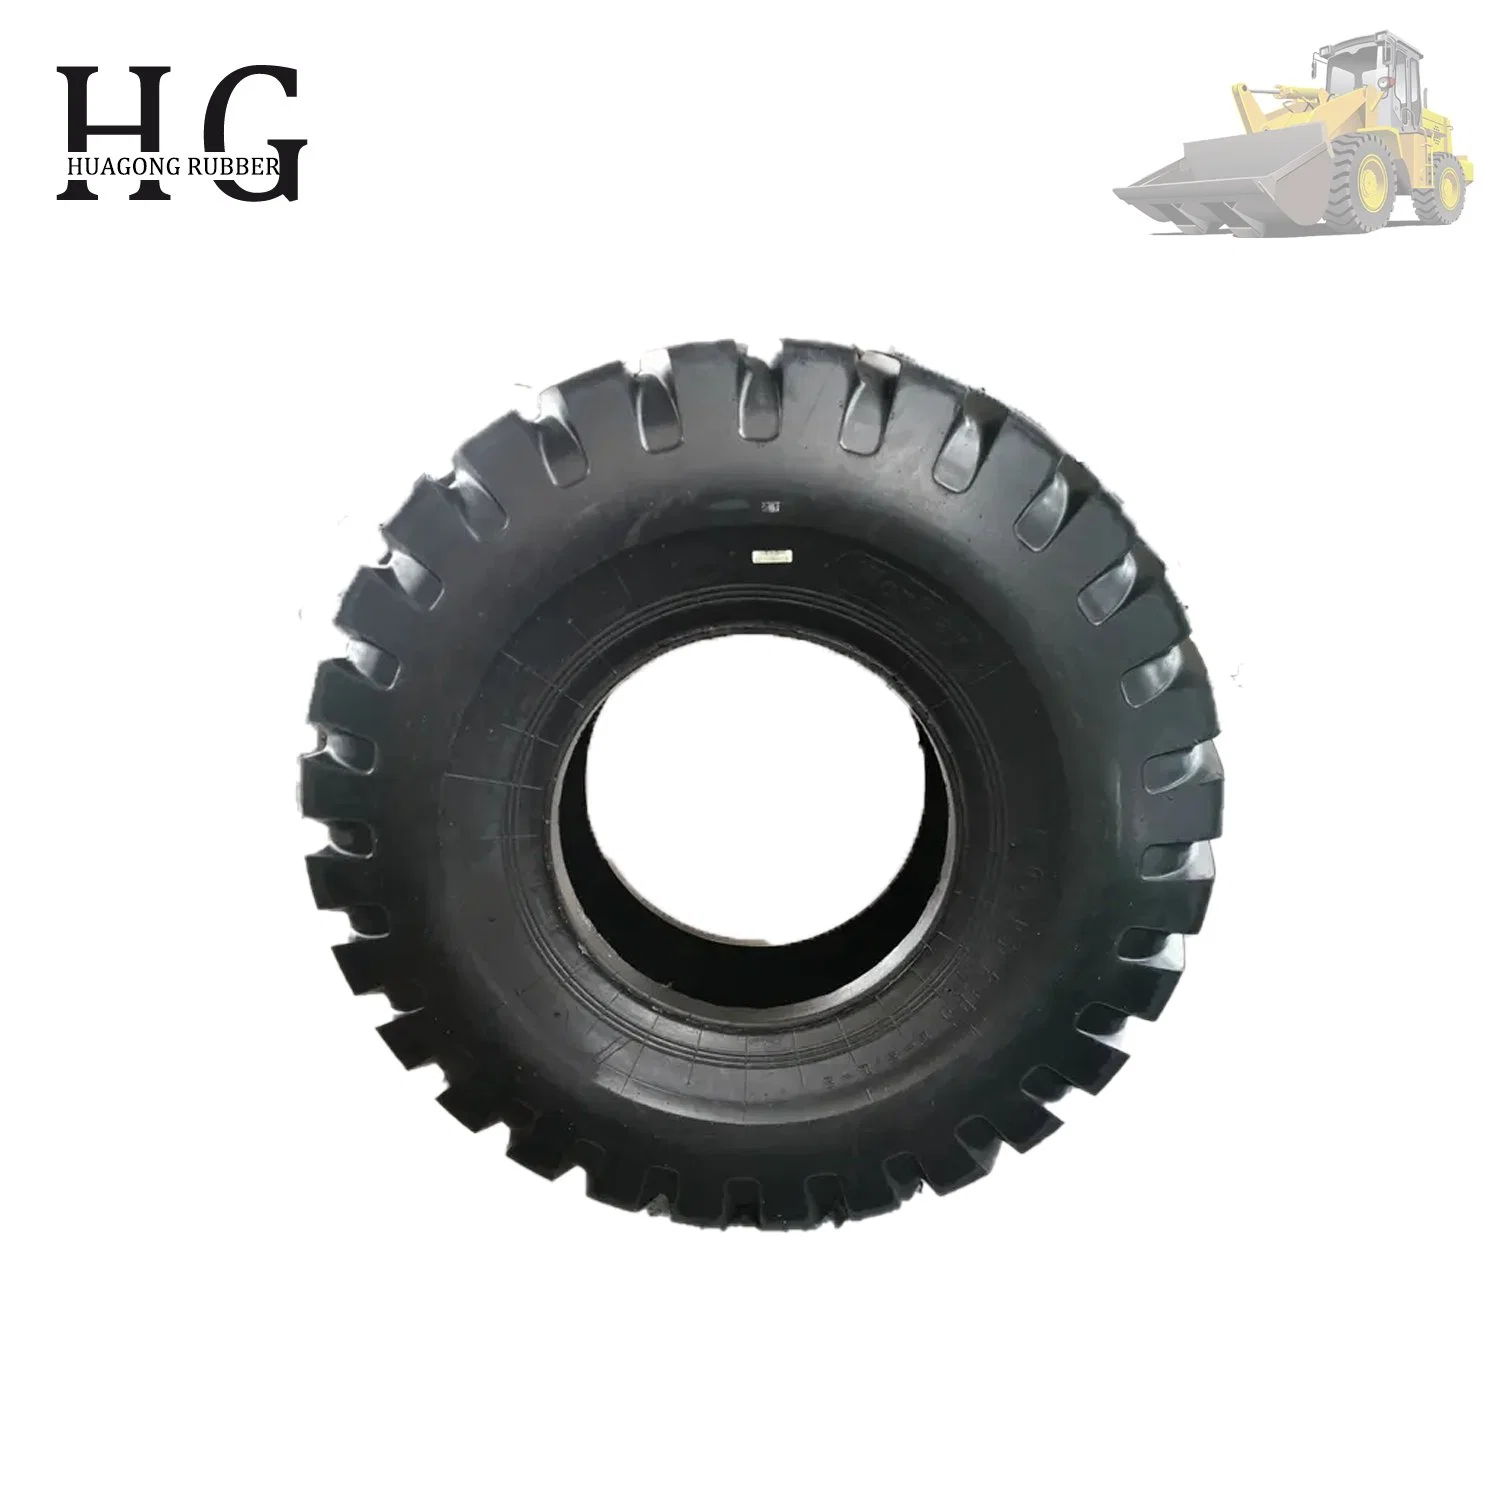 OTR L3/E3 Industrial Nylon Tires Made in China